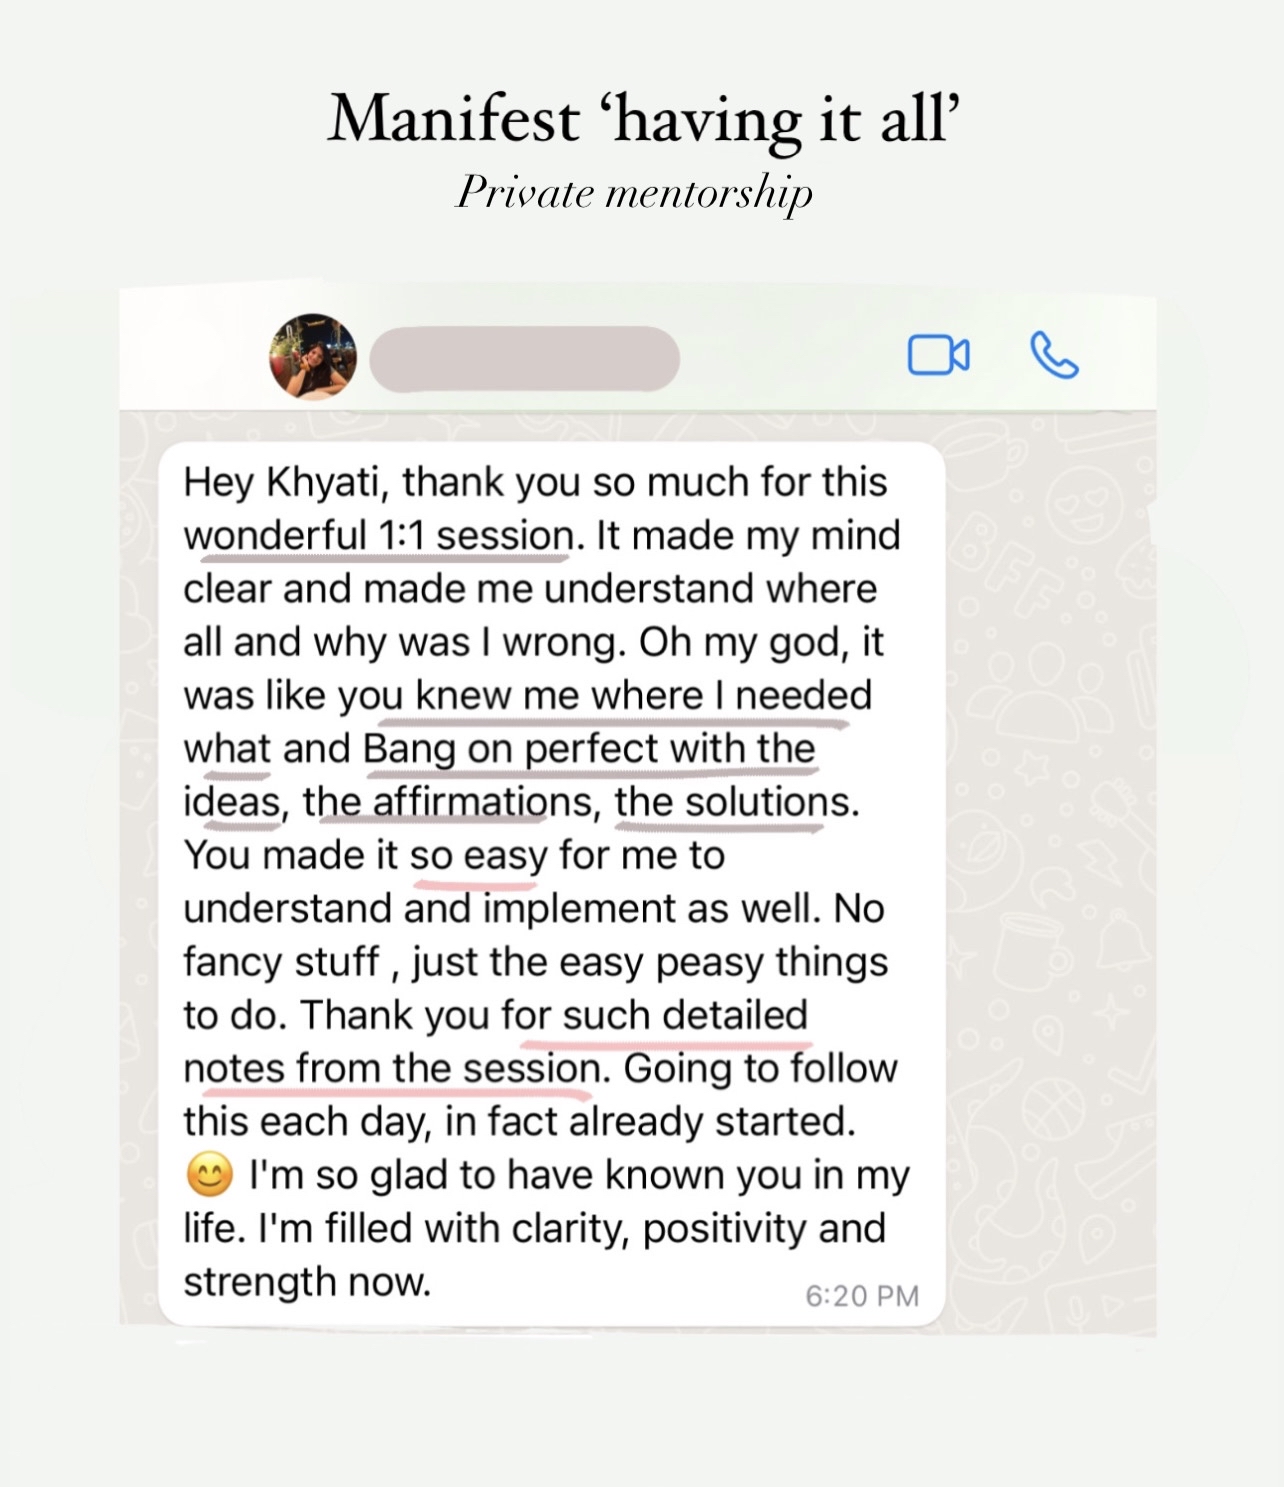 Manifest ‘having it all’ mentorship